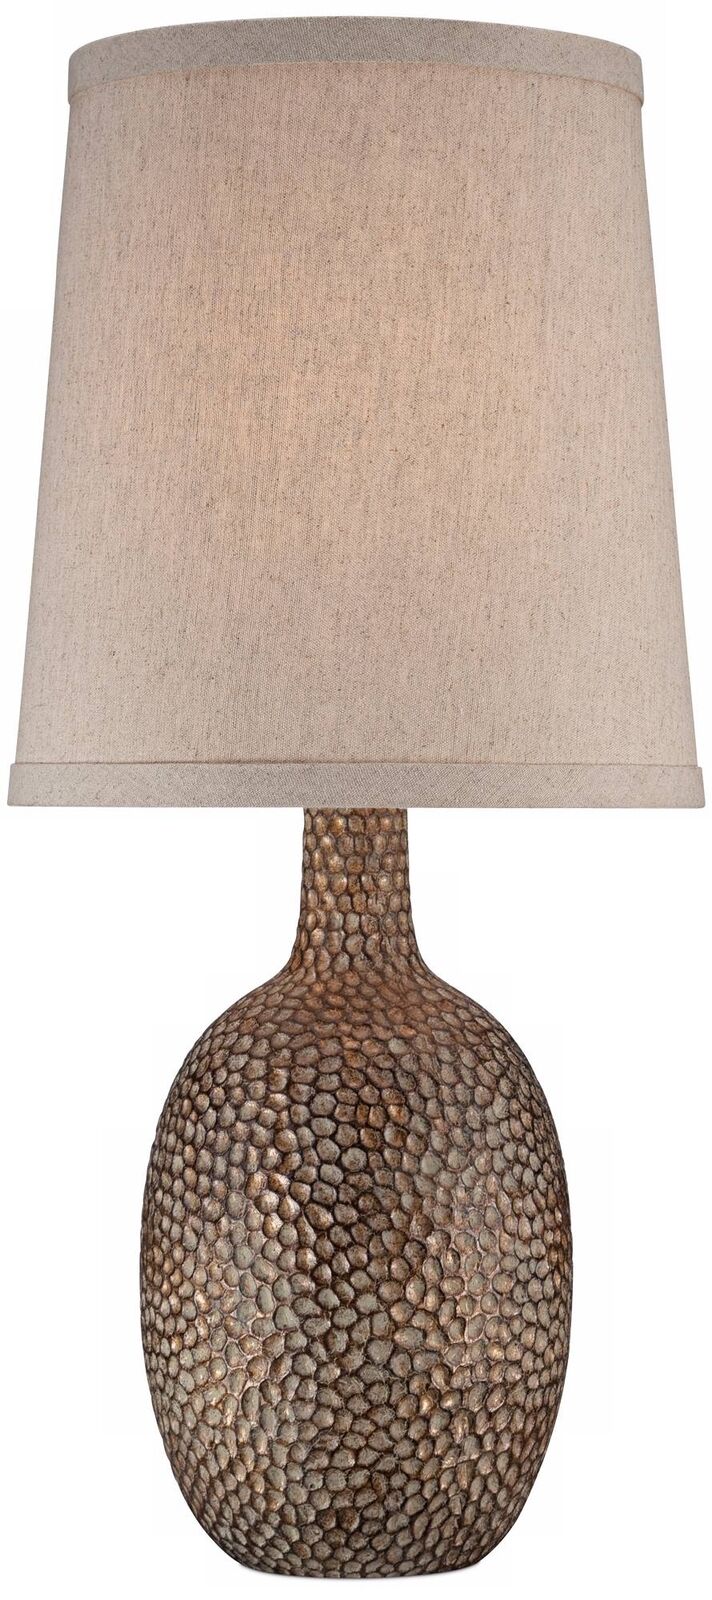 Beige Linen Modern Table Lamp Antique Bronze Design Home Decor